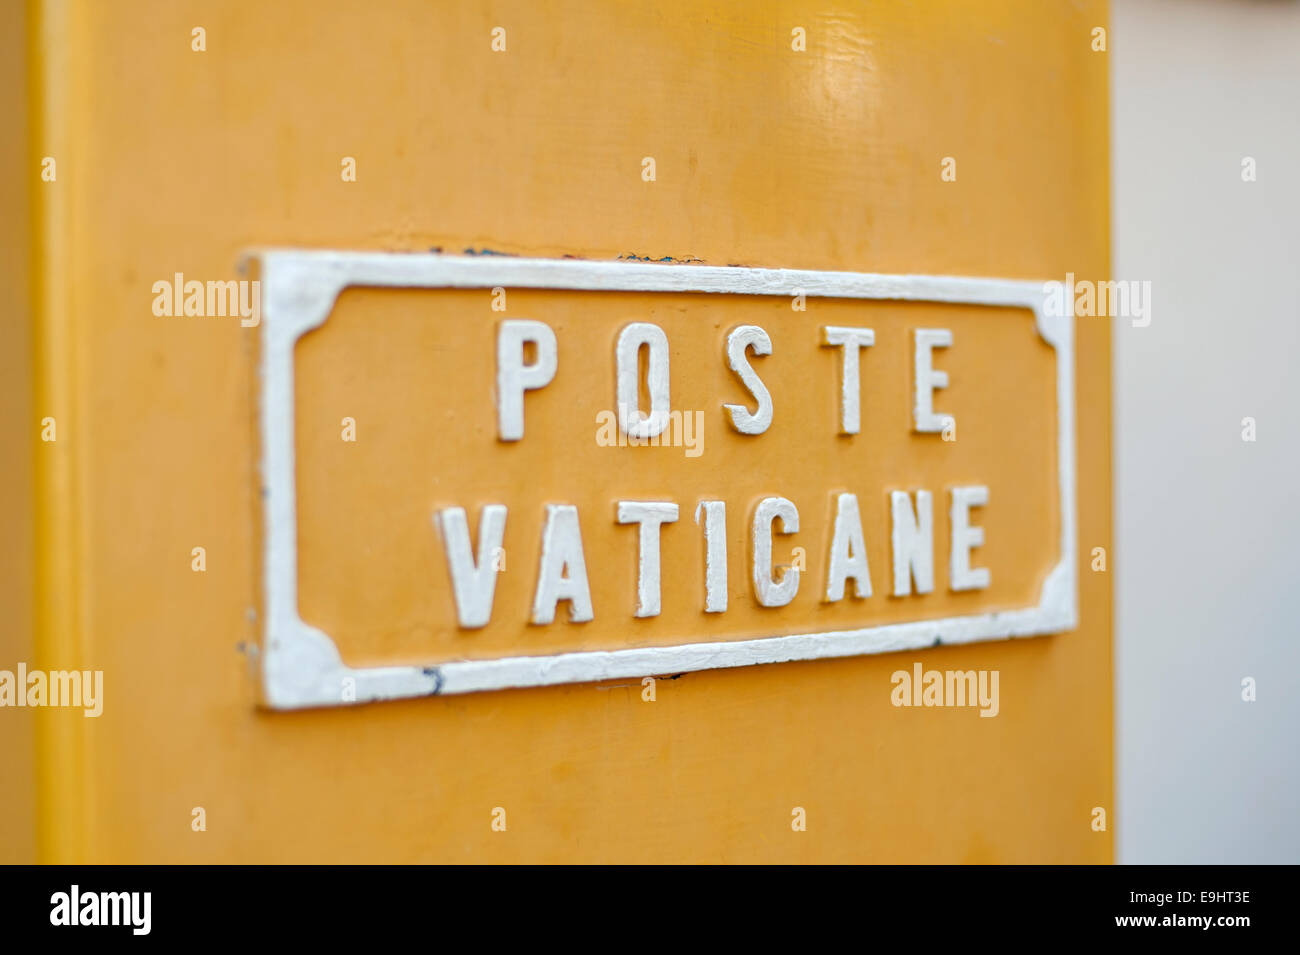 Le Vatican Postbox Banque D'Images